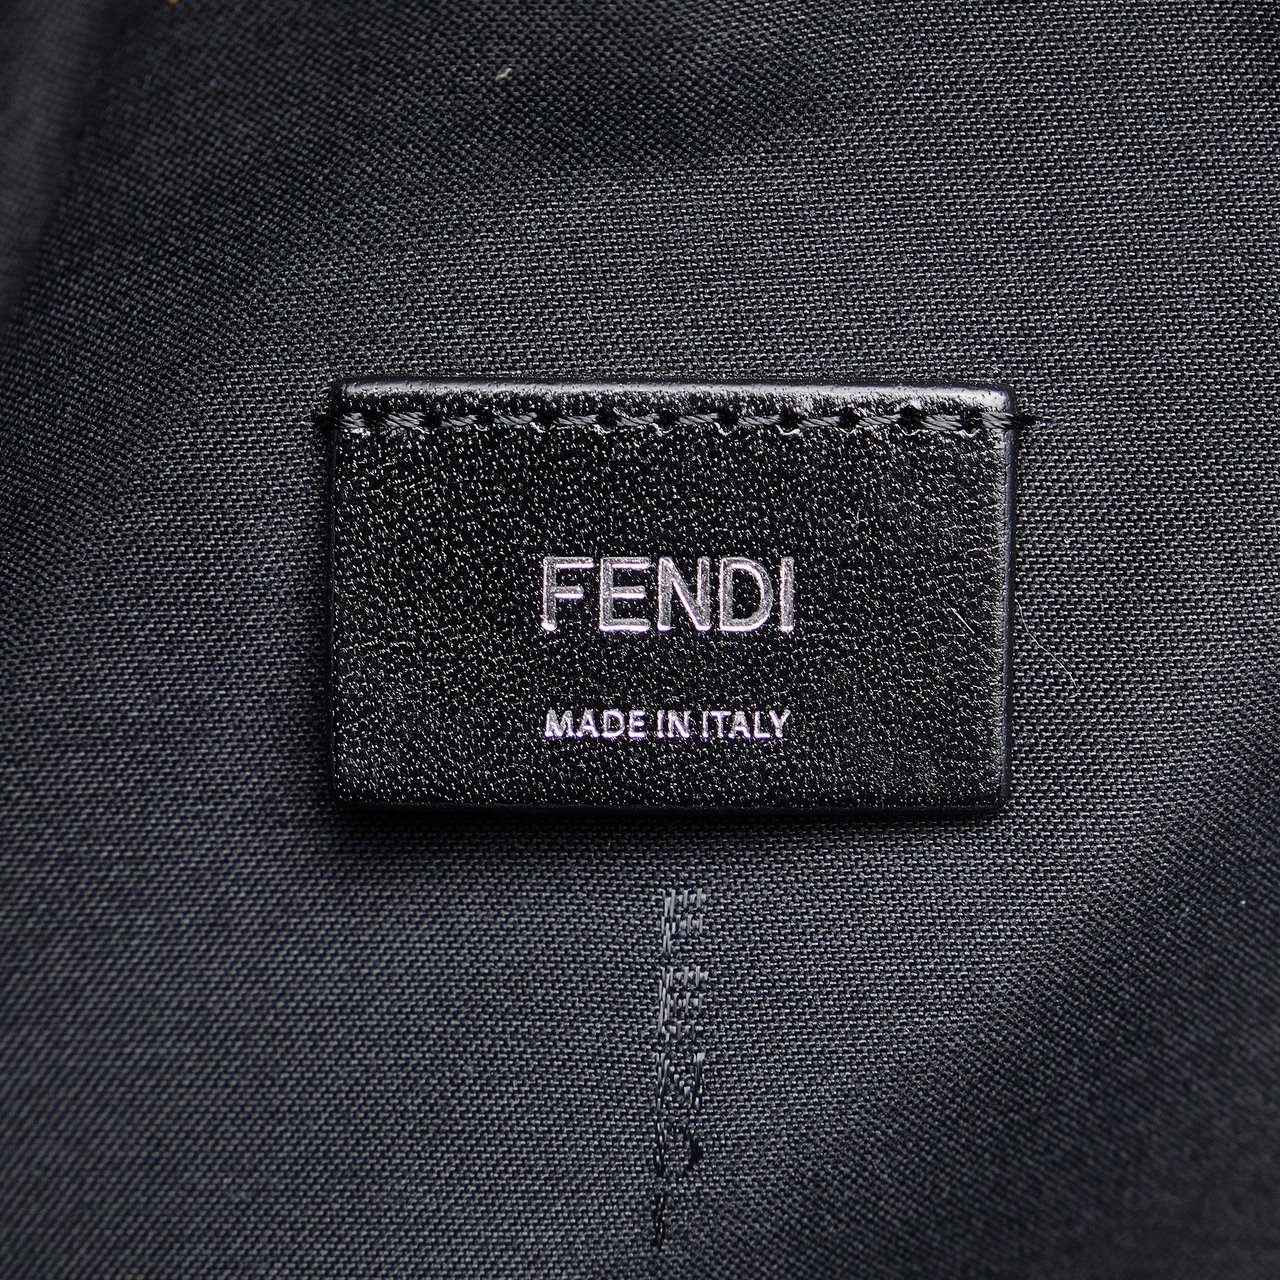 Fendi Zucca Multi Pocket Backpack Bruin